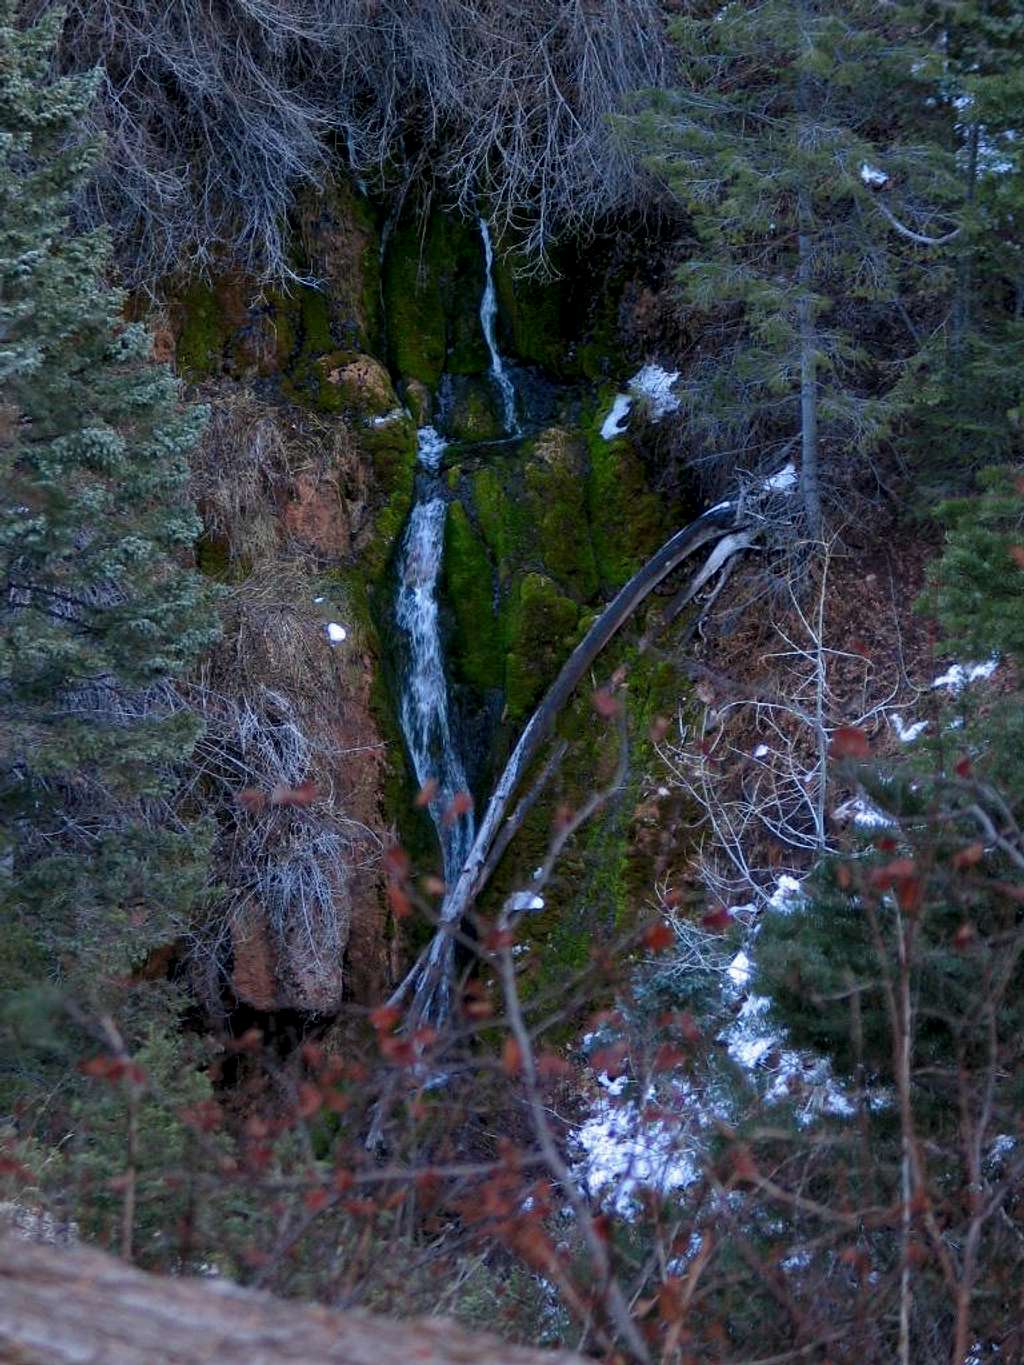 An enchanting waterfall across the deep gorge.